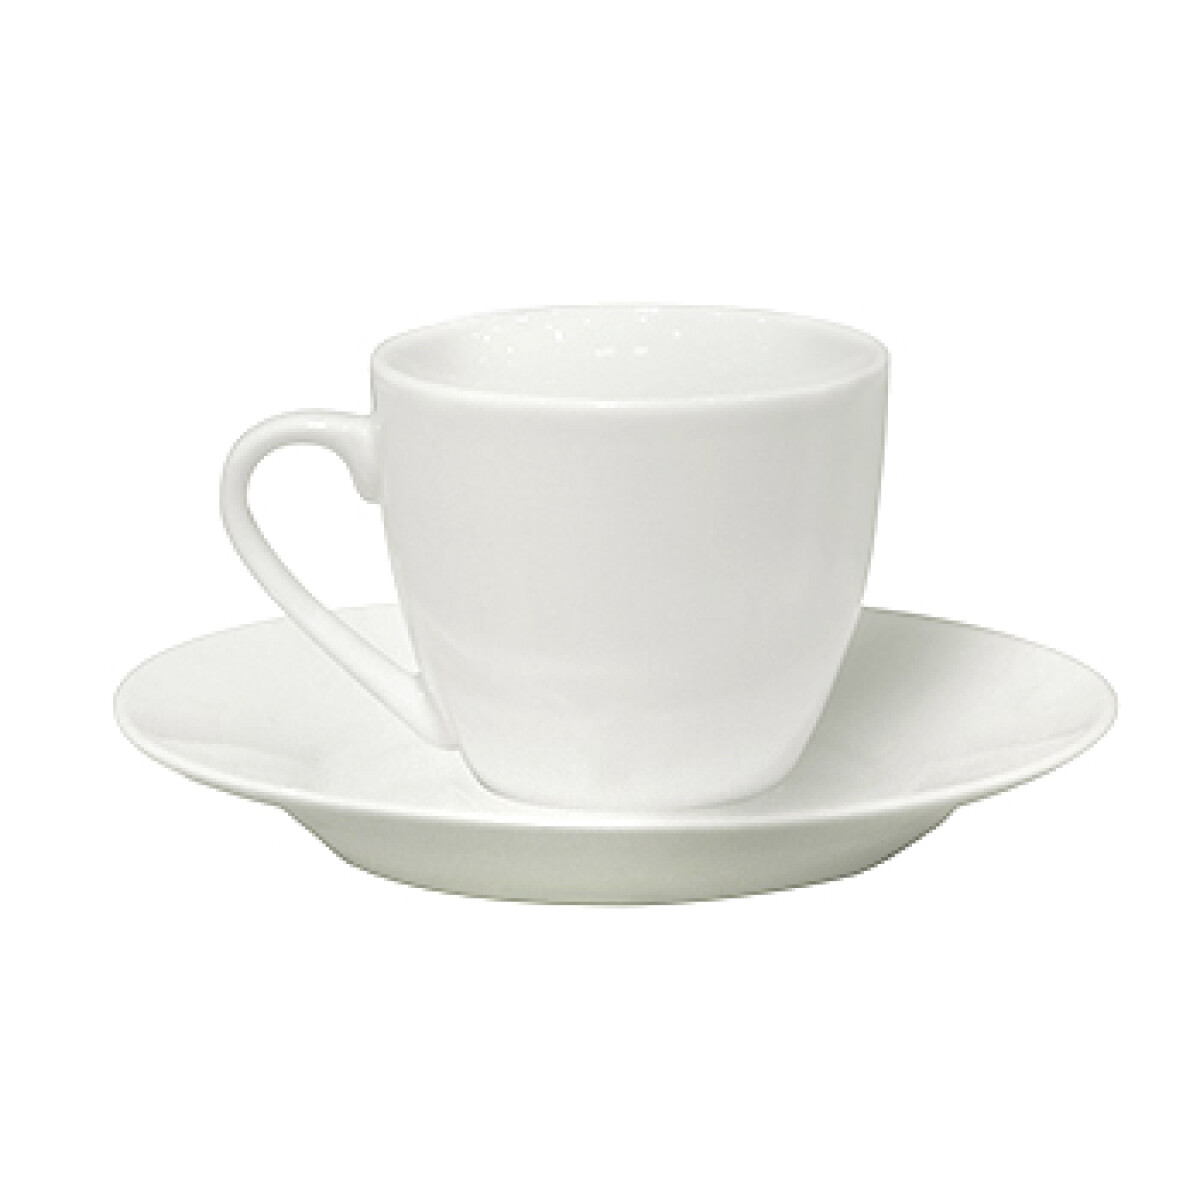 Taza Café con plato oval 90 ml Porcelana - 000 